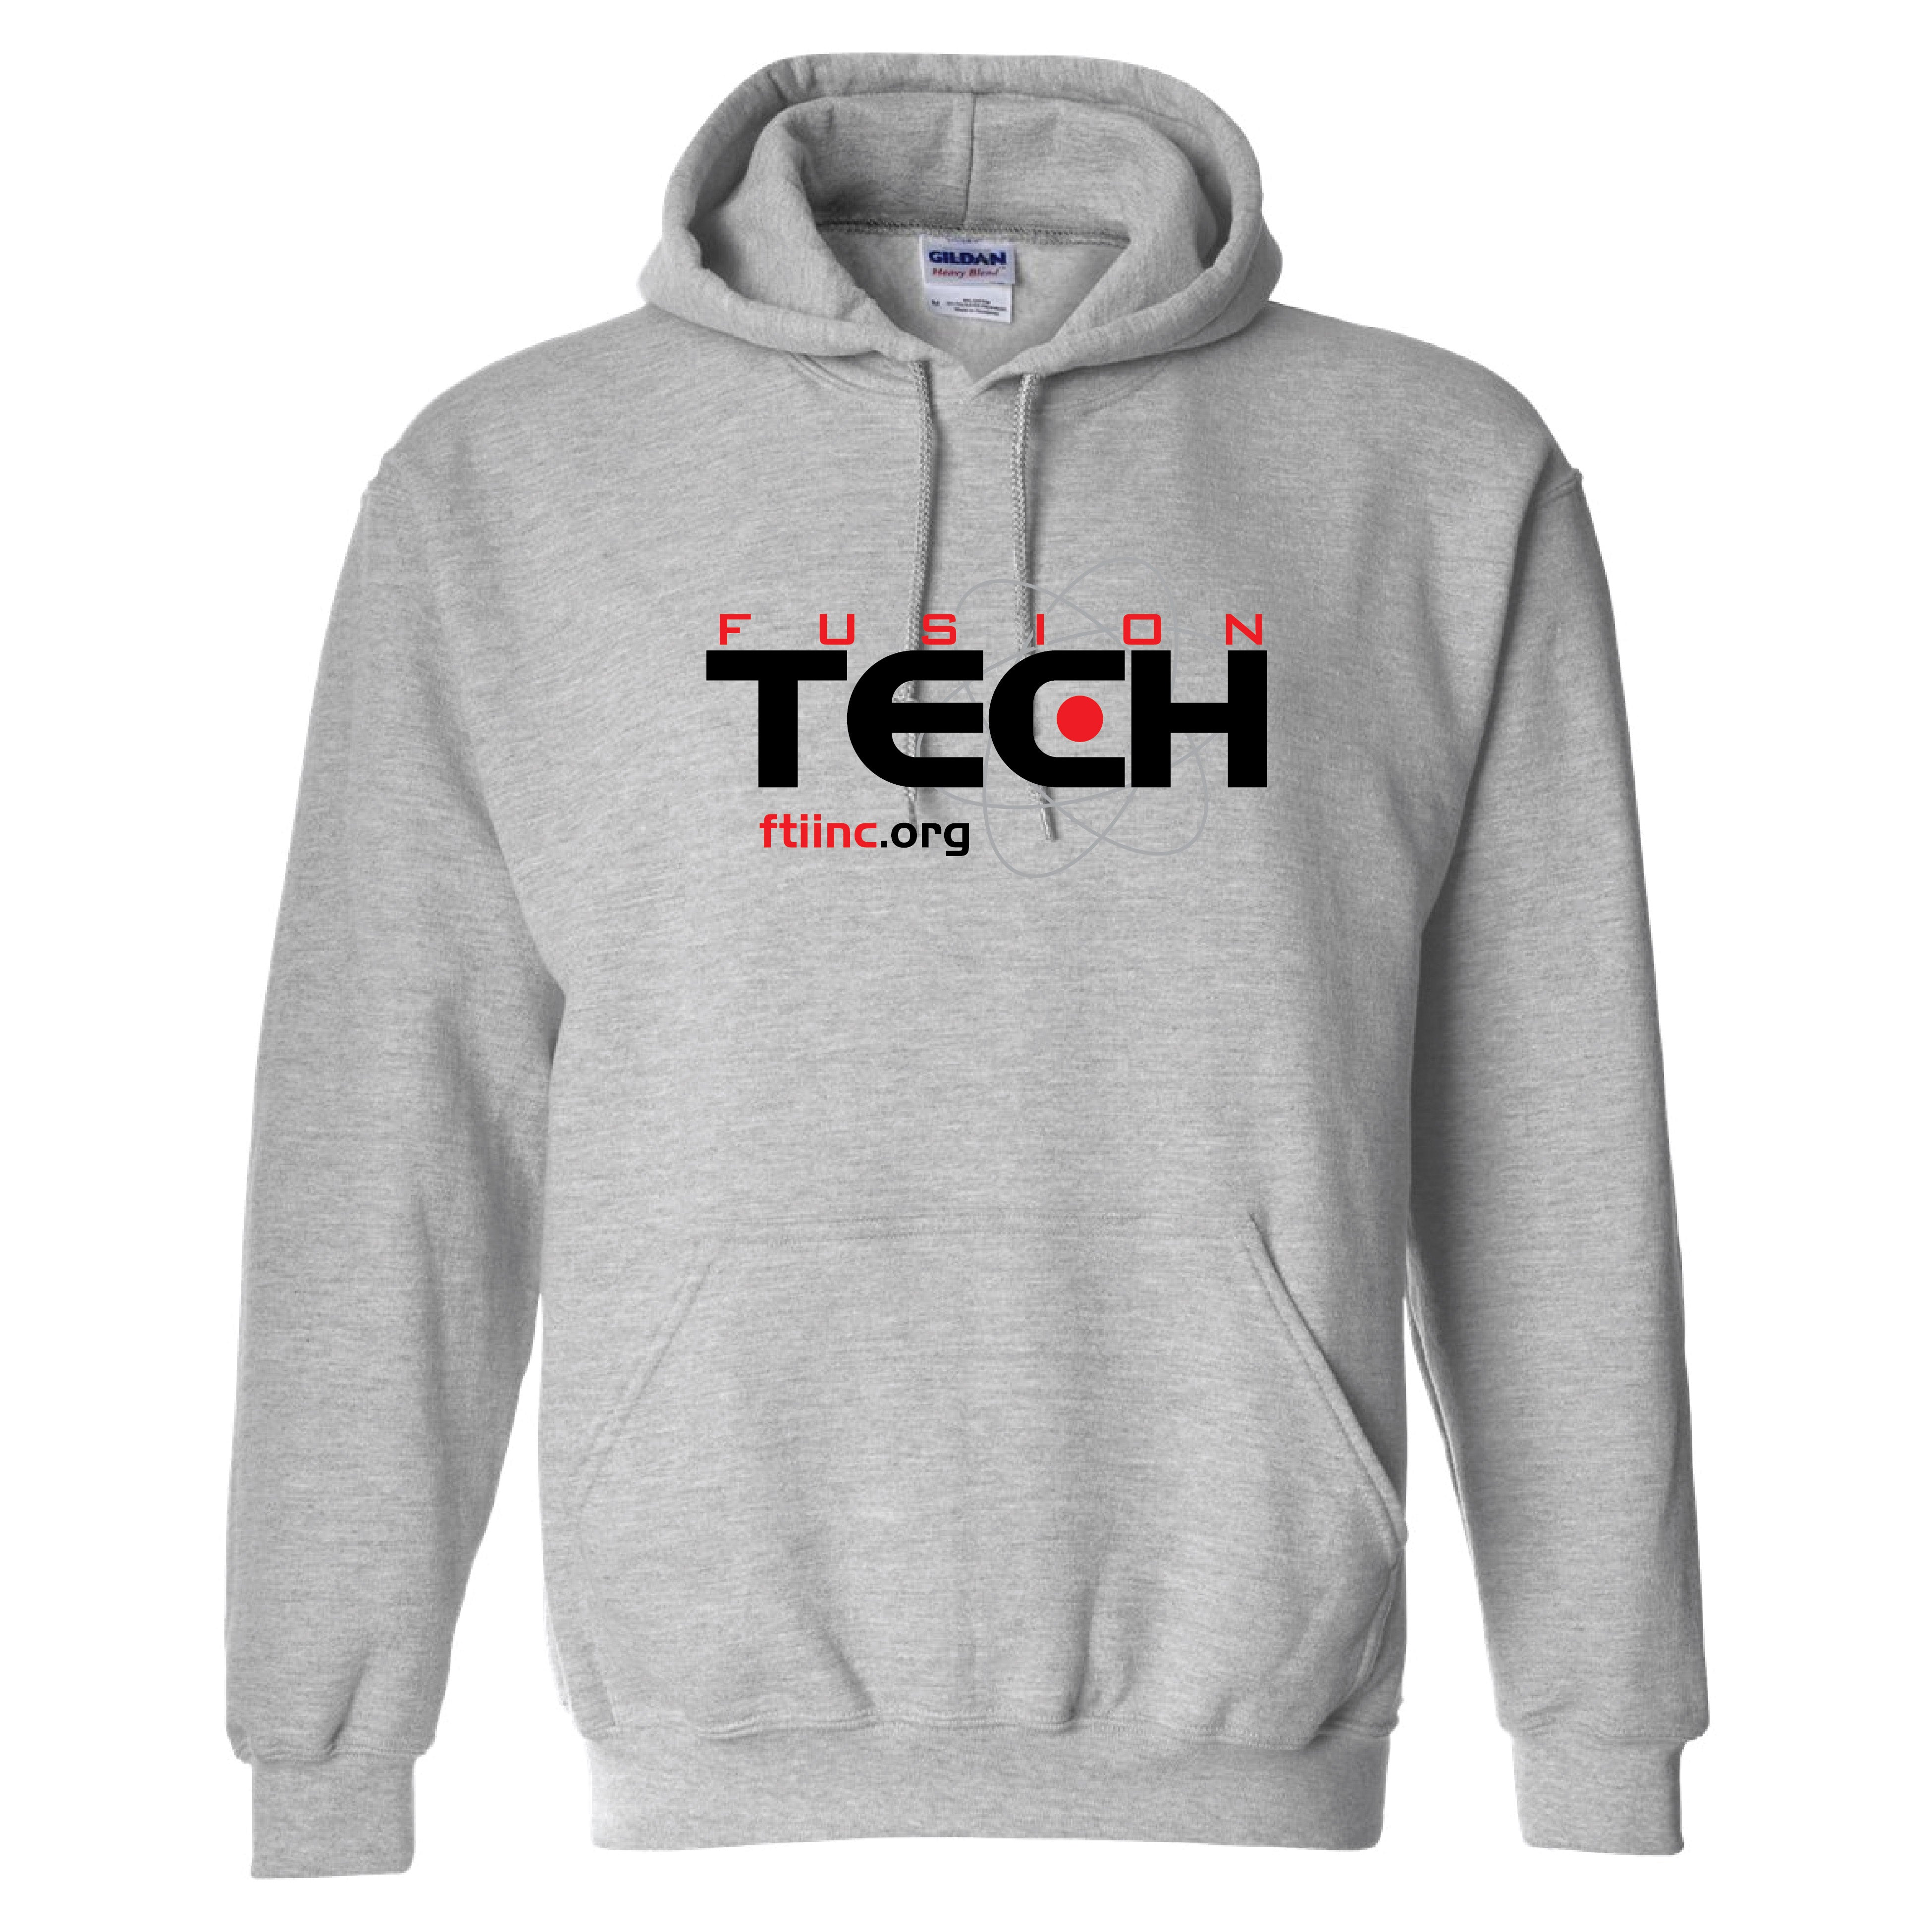 Fusion Tech Screenprinted Hooded Sweatshirt